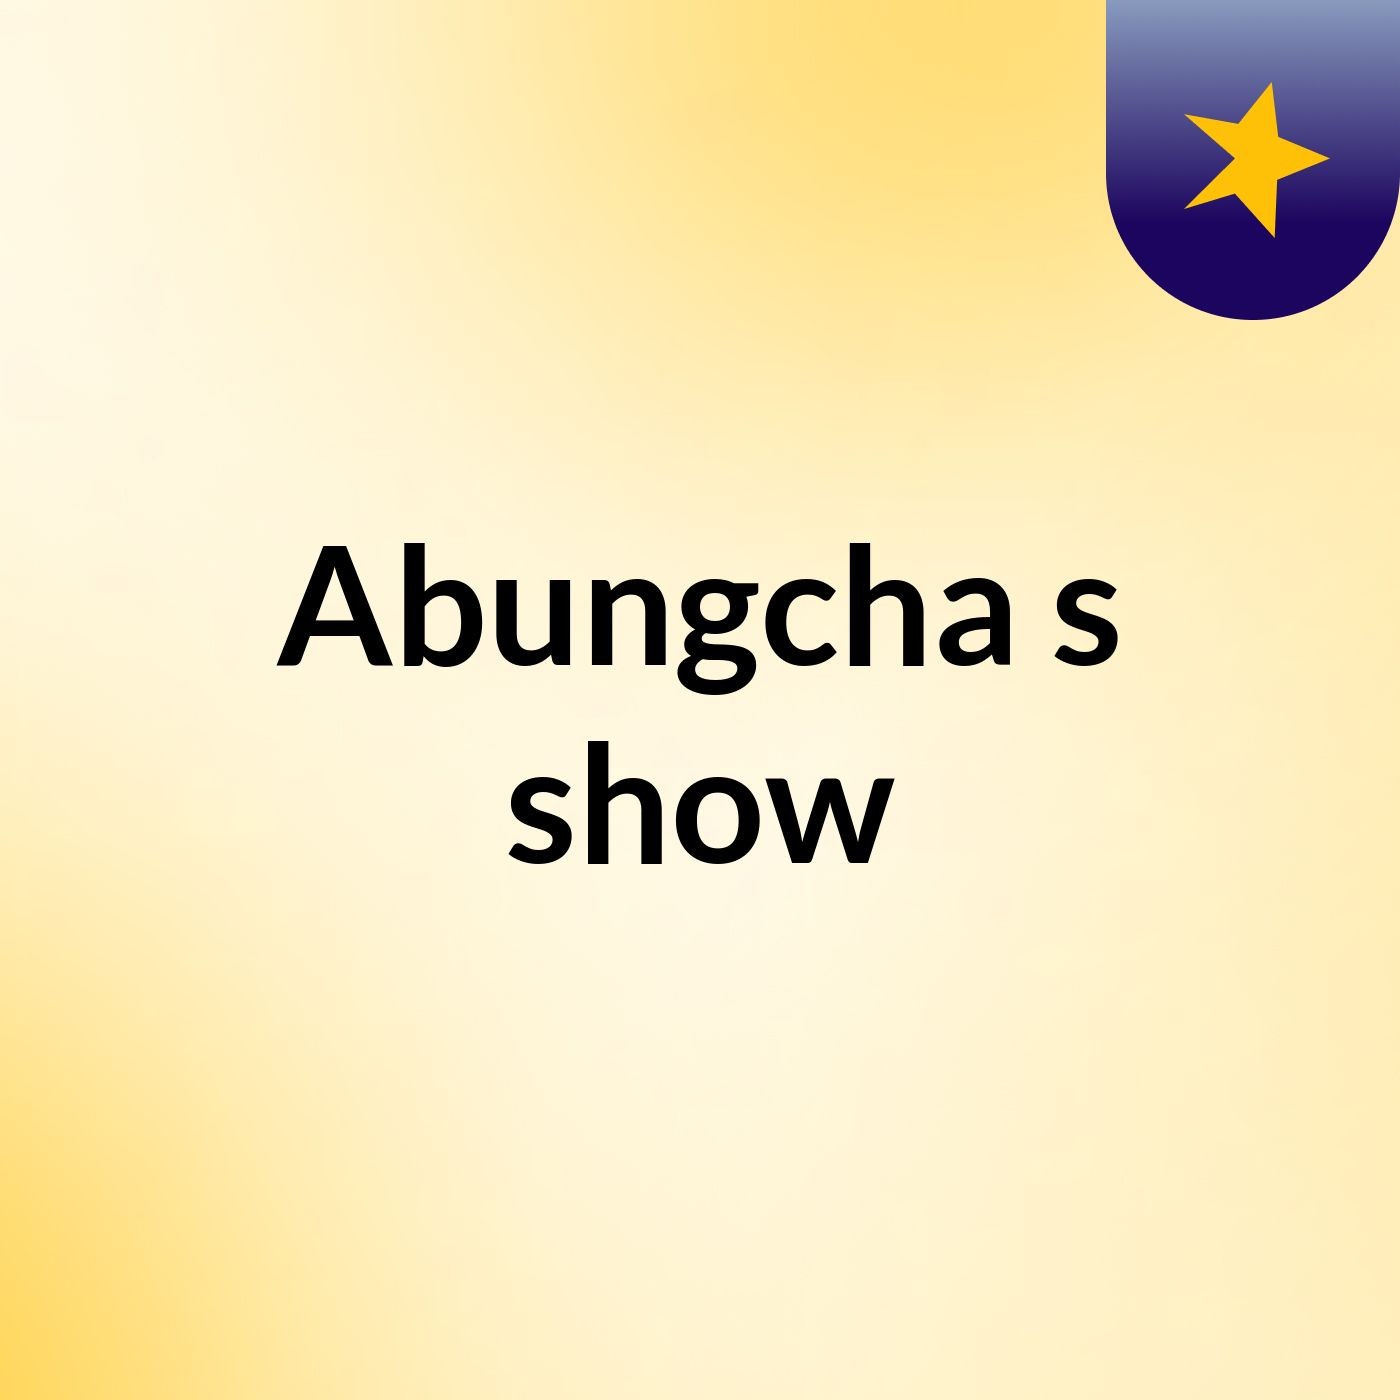 Abungcha's show